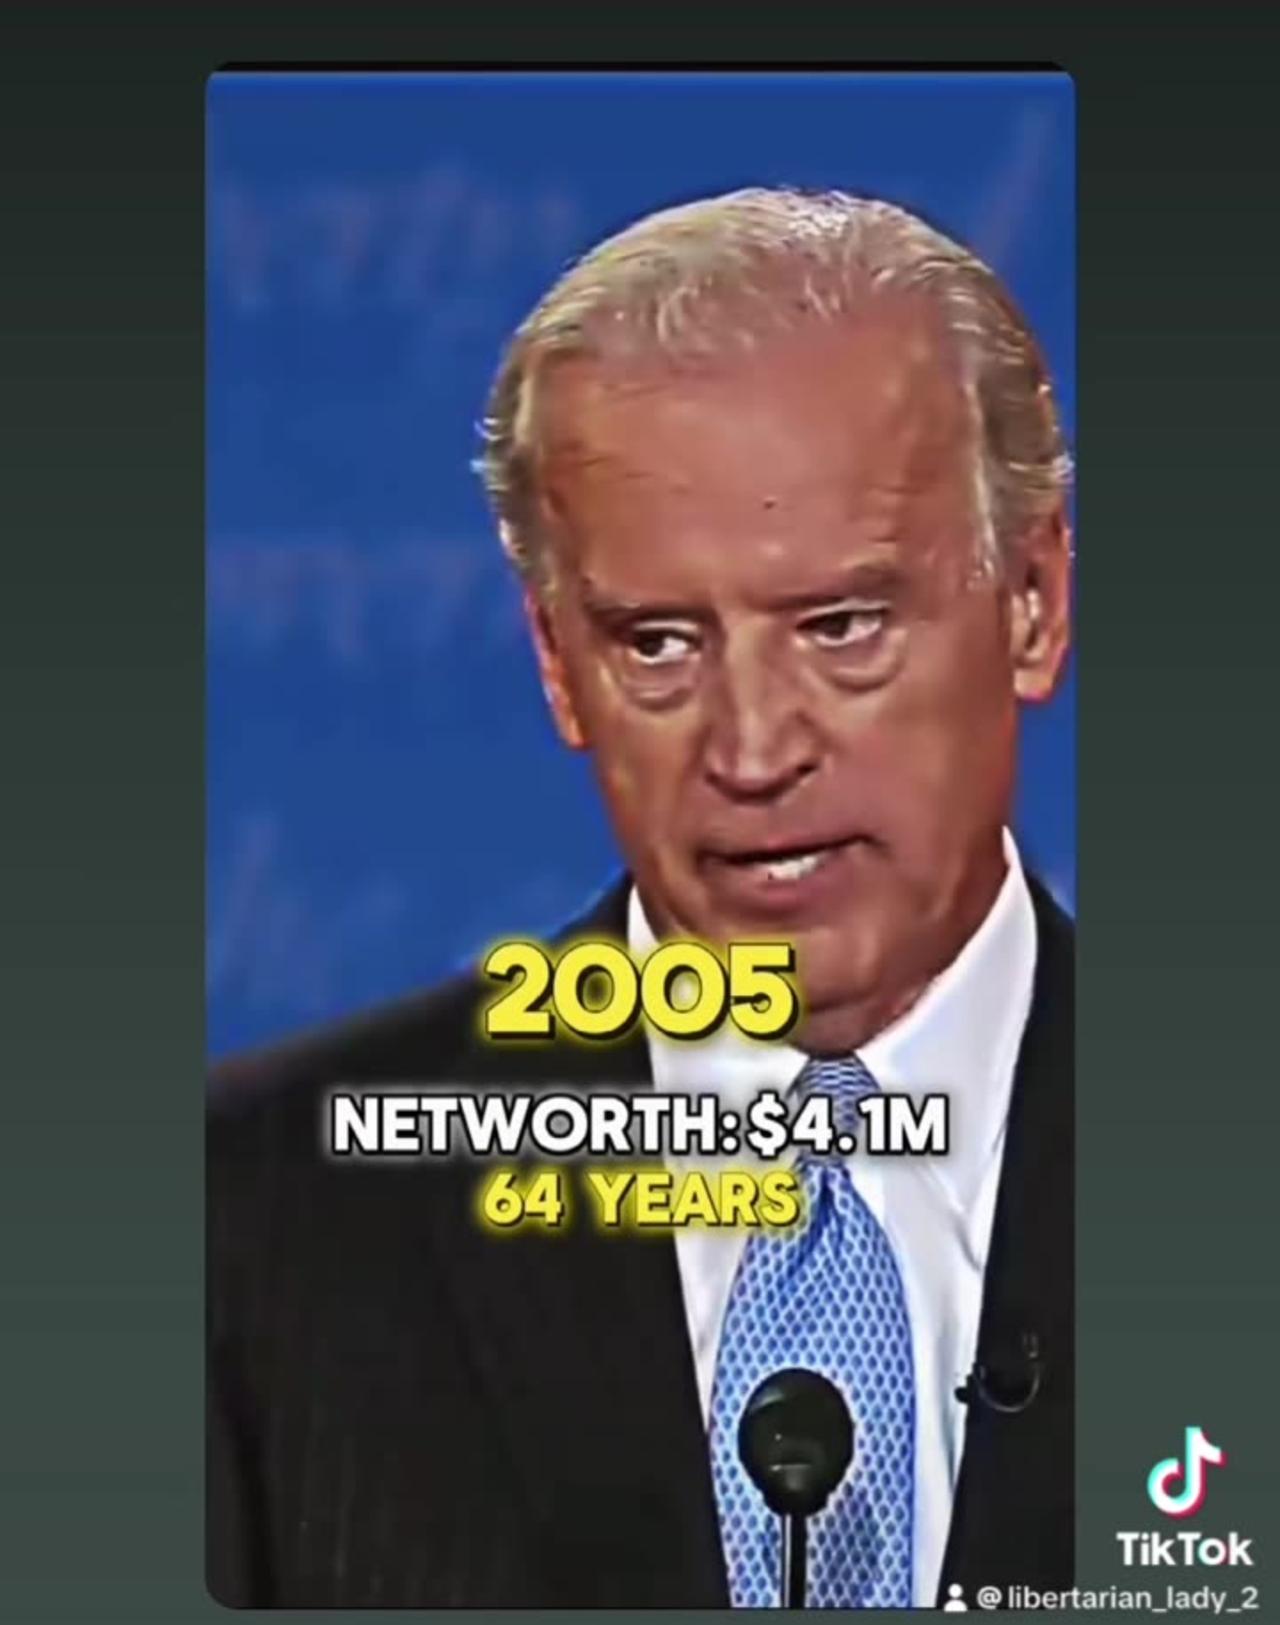 Joe Biden’s Net-worth over the years